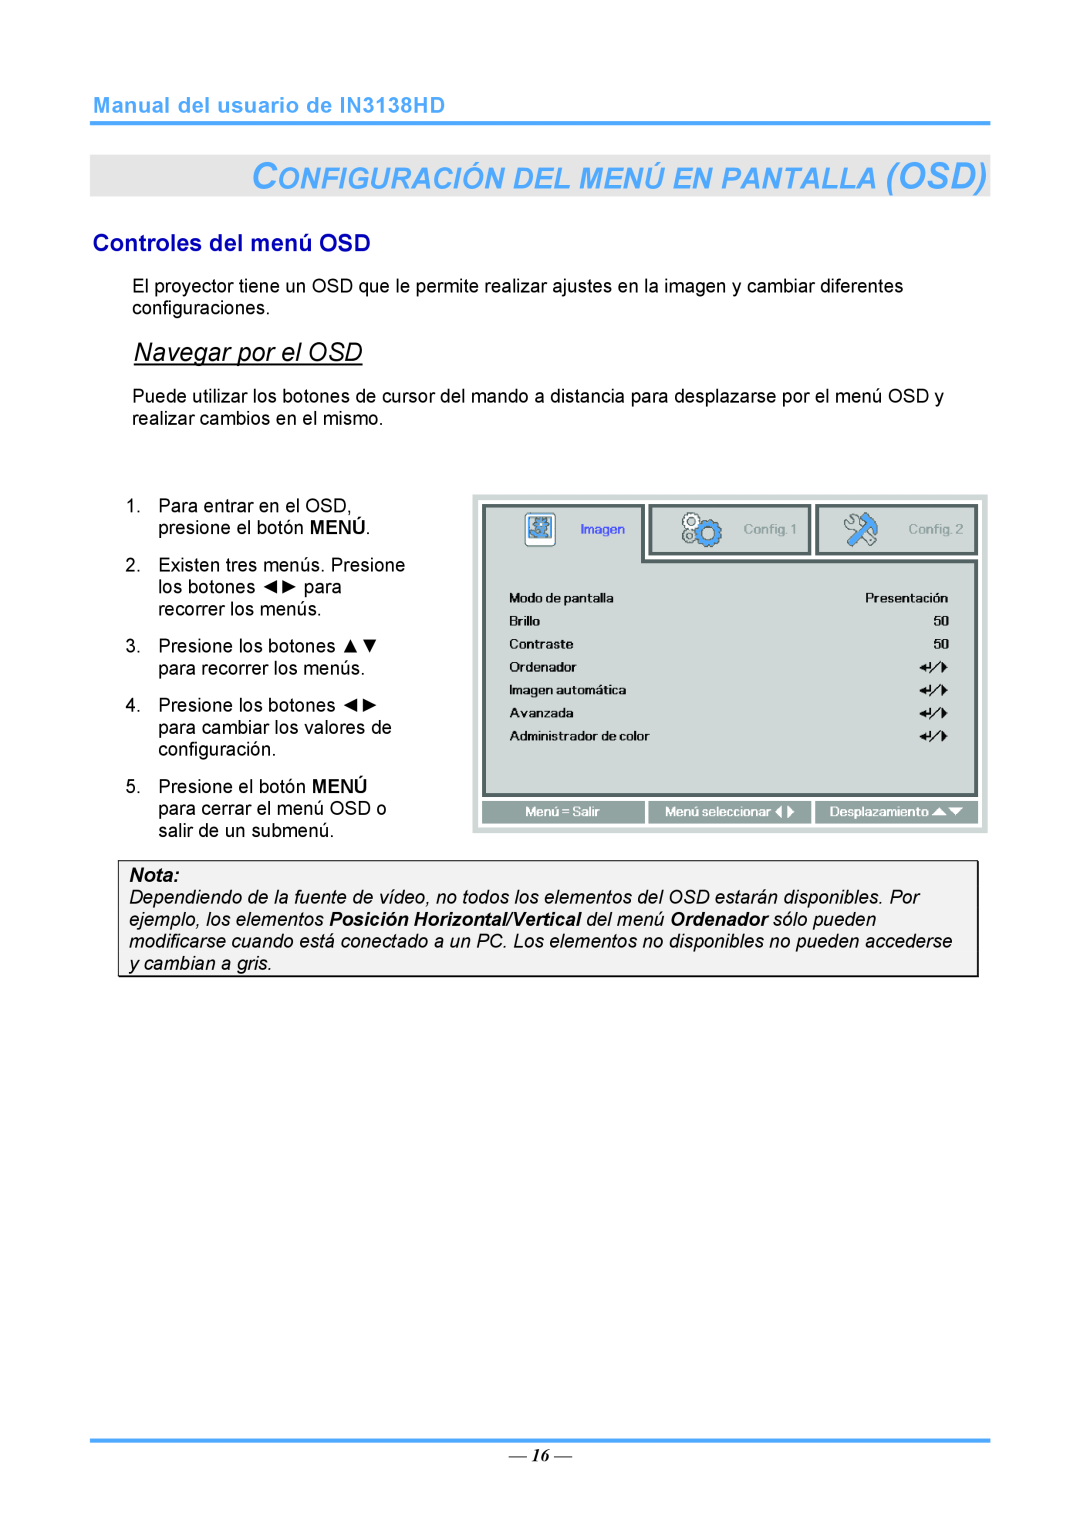 InFocus 3534324301, IN3138HD manual Configuración Del Menú En Pantalla Osd, Navegar por el OSD, Controles del menú OSD, Nota 